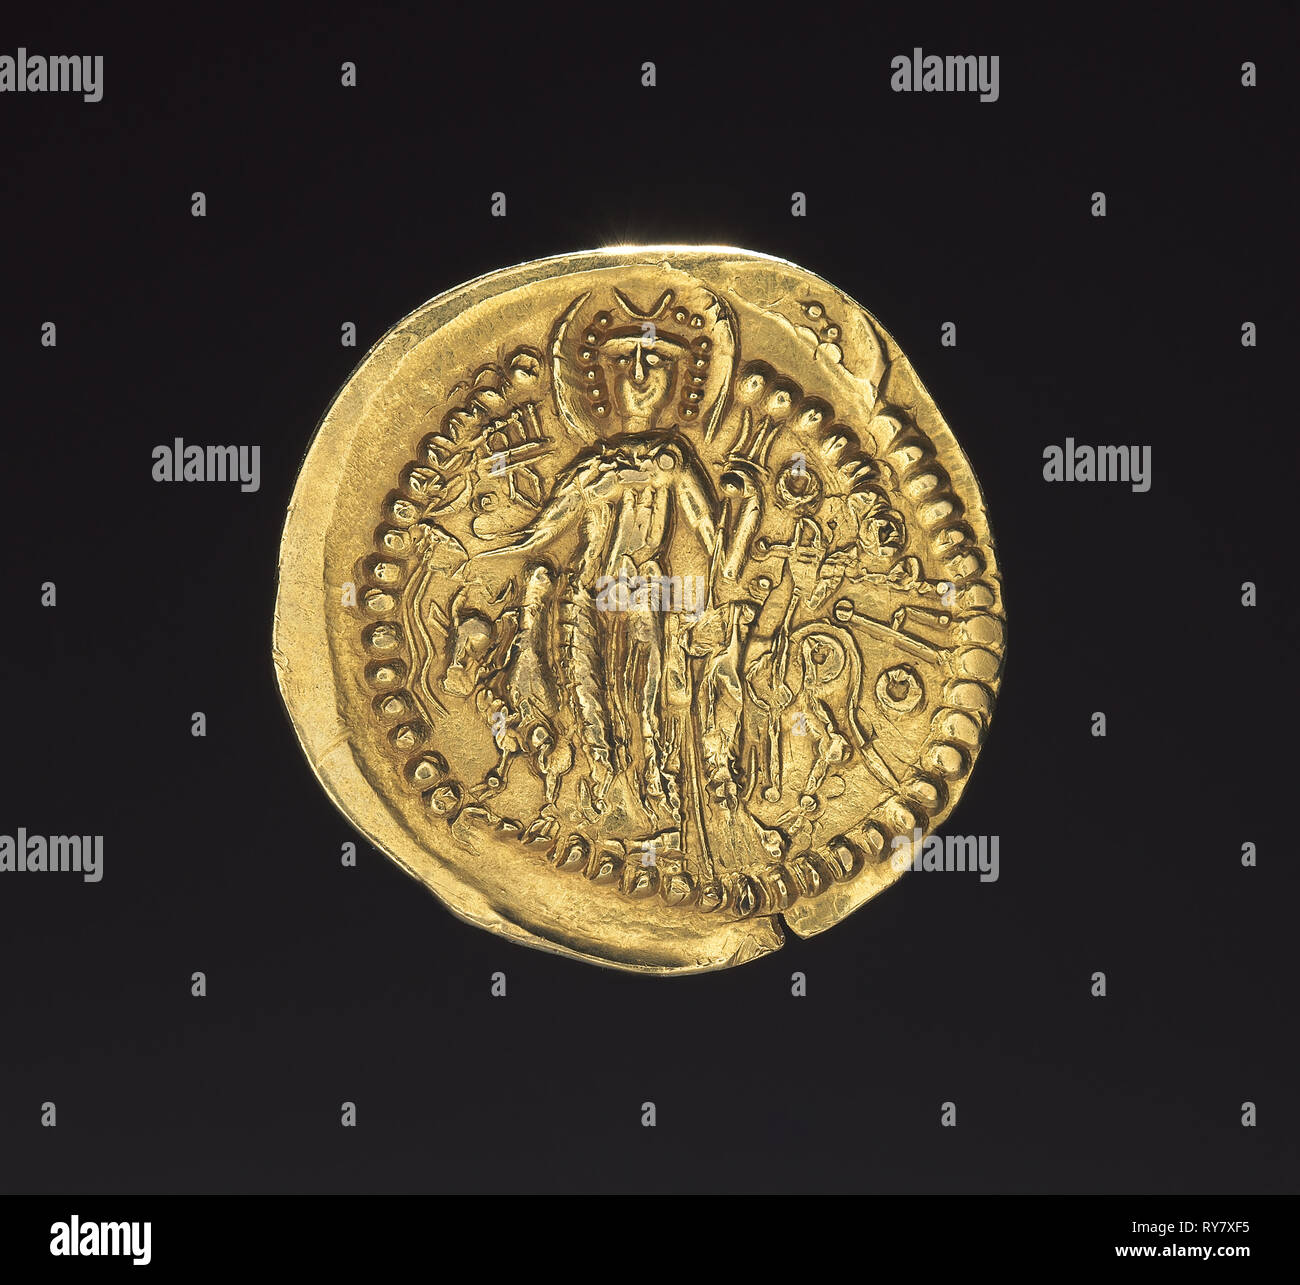 Dinar d'or, 200s. L'Inde, Vasudeva, Kushan II, 3e siècle. Or, diamètre : 2,4 x 0,1 cm (15/16 x 1/16 po Banque D'Images